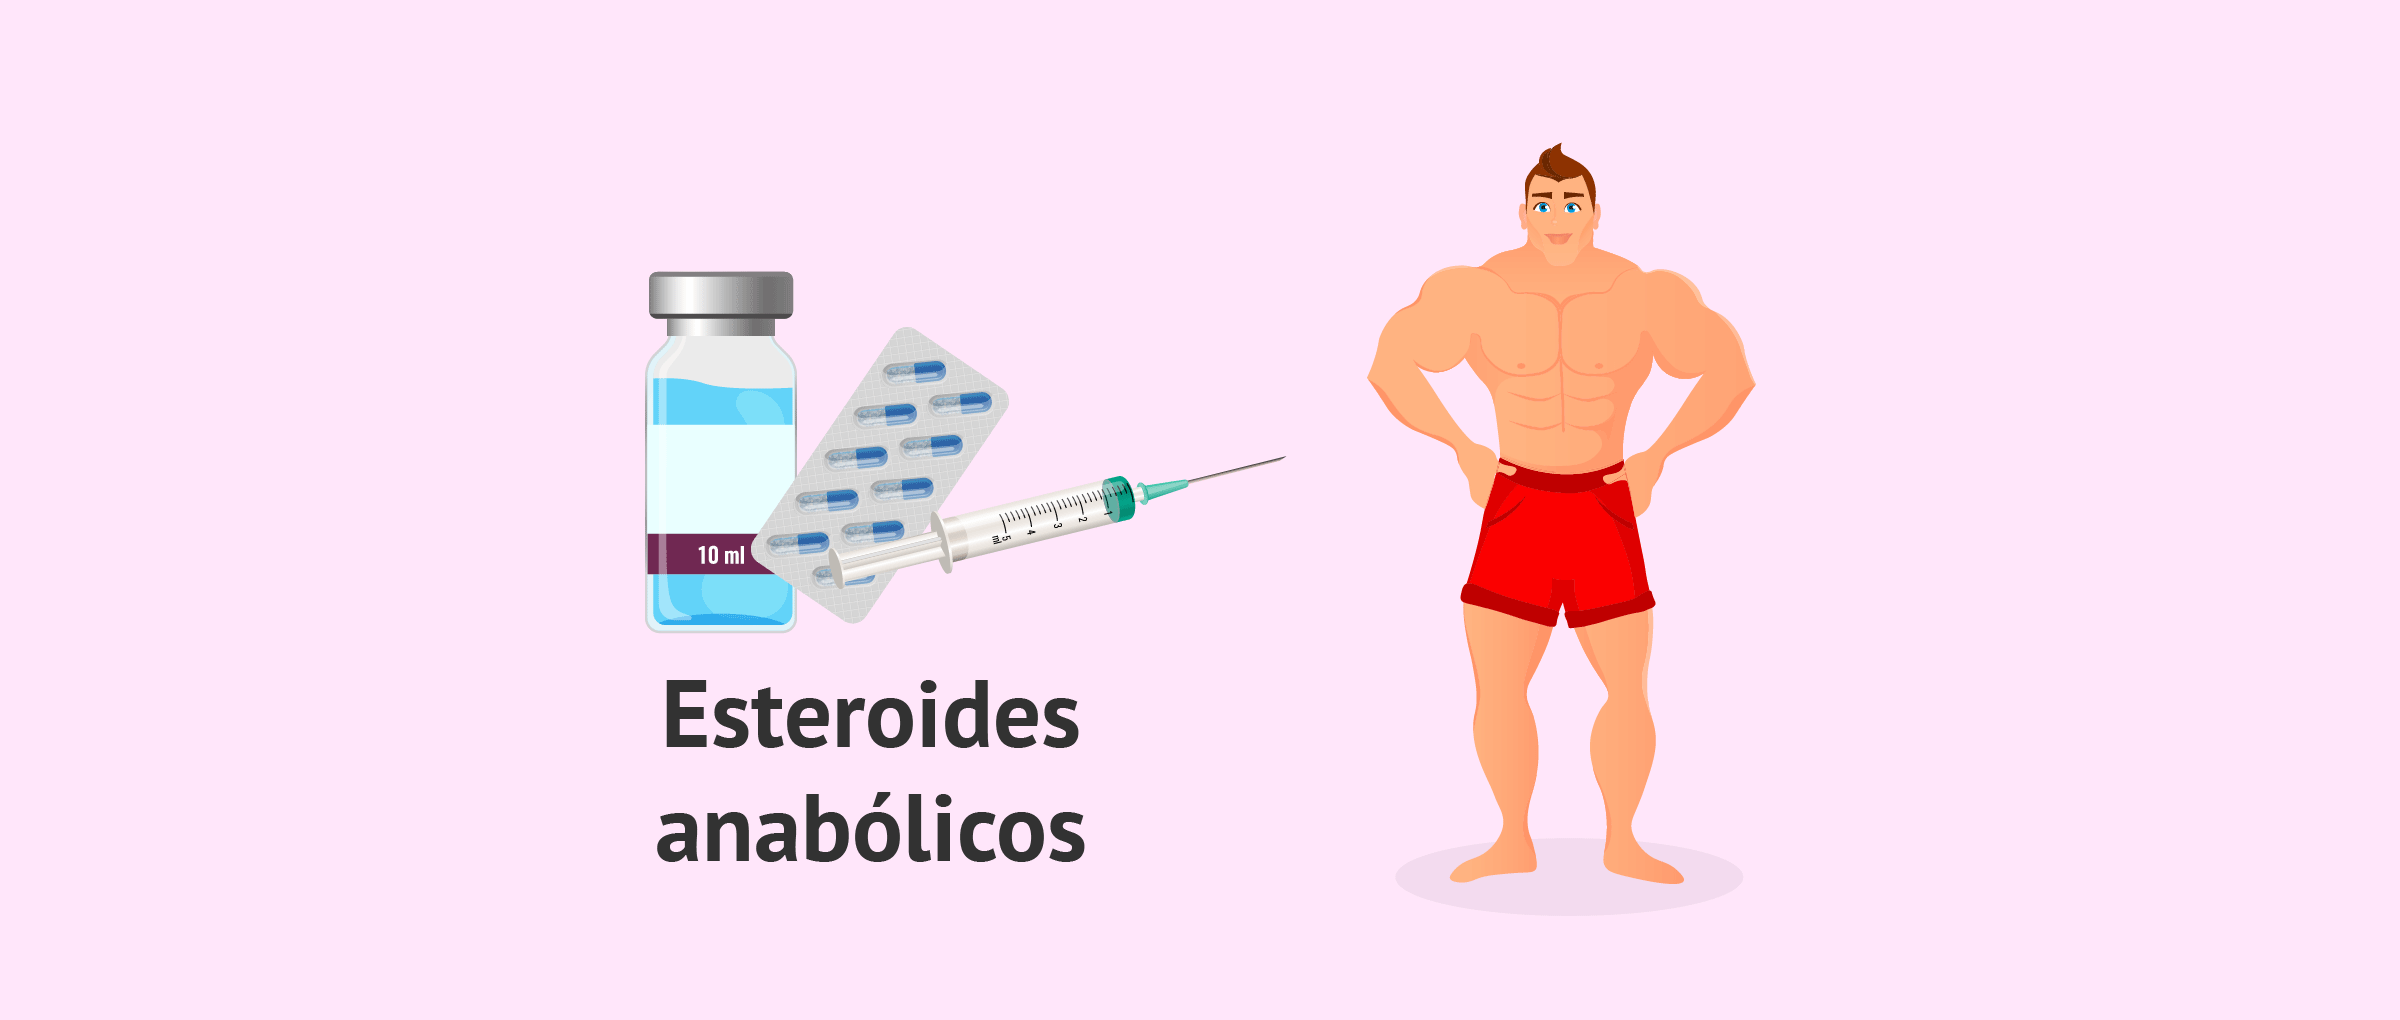 Acelere su anabolicos vs esteroides